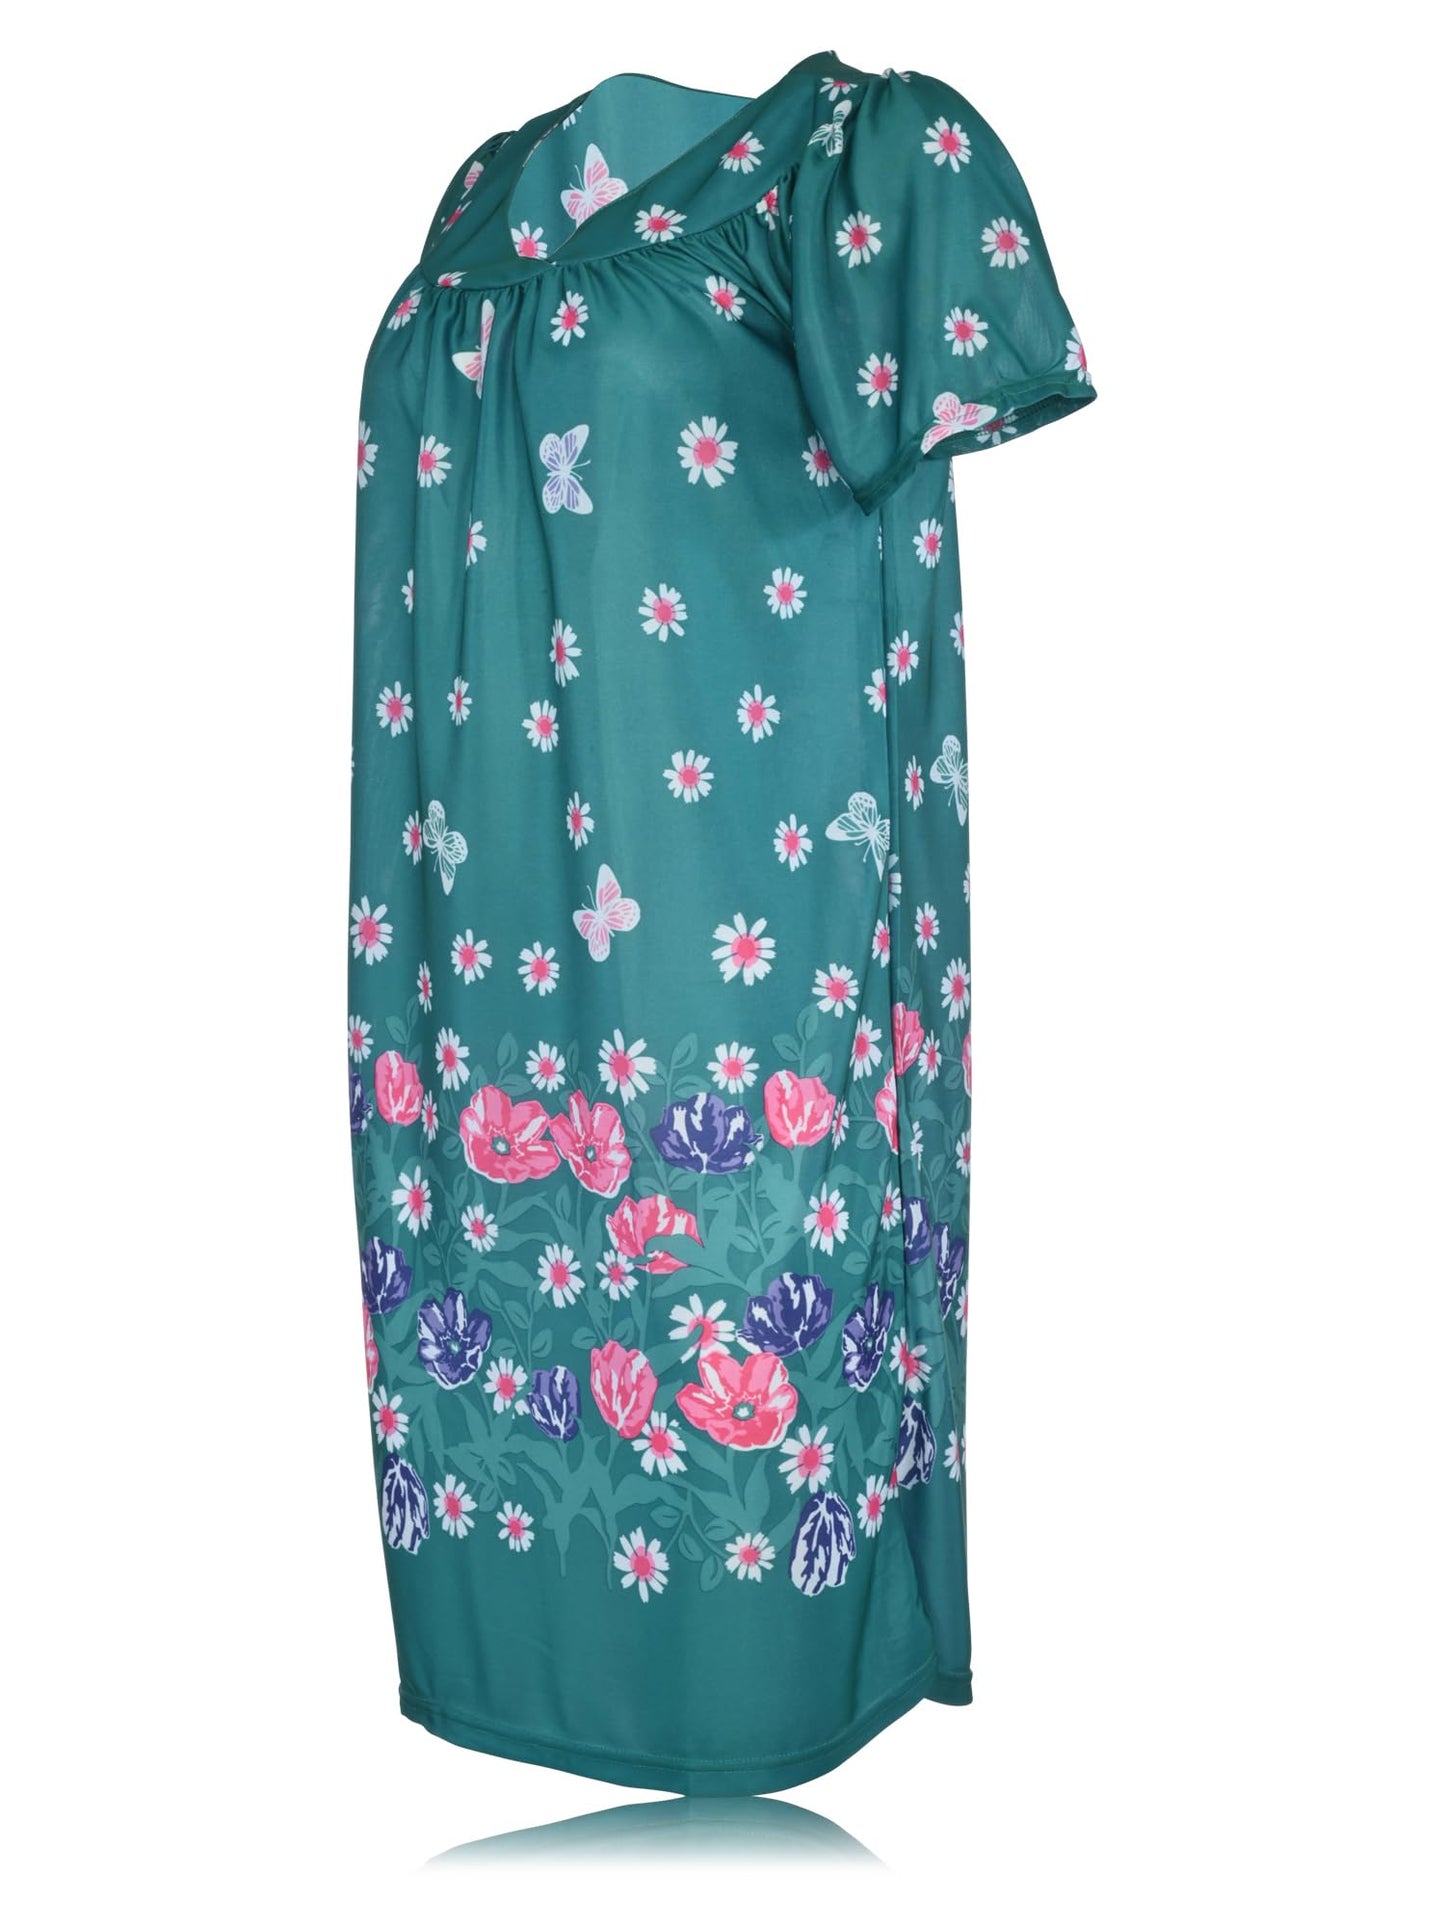 JEFFRICO Womens Nightgowns Muumuu Lounger House Dress Sleepwear Silky Soft Pajama Dress Nightshirts